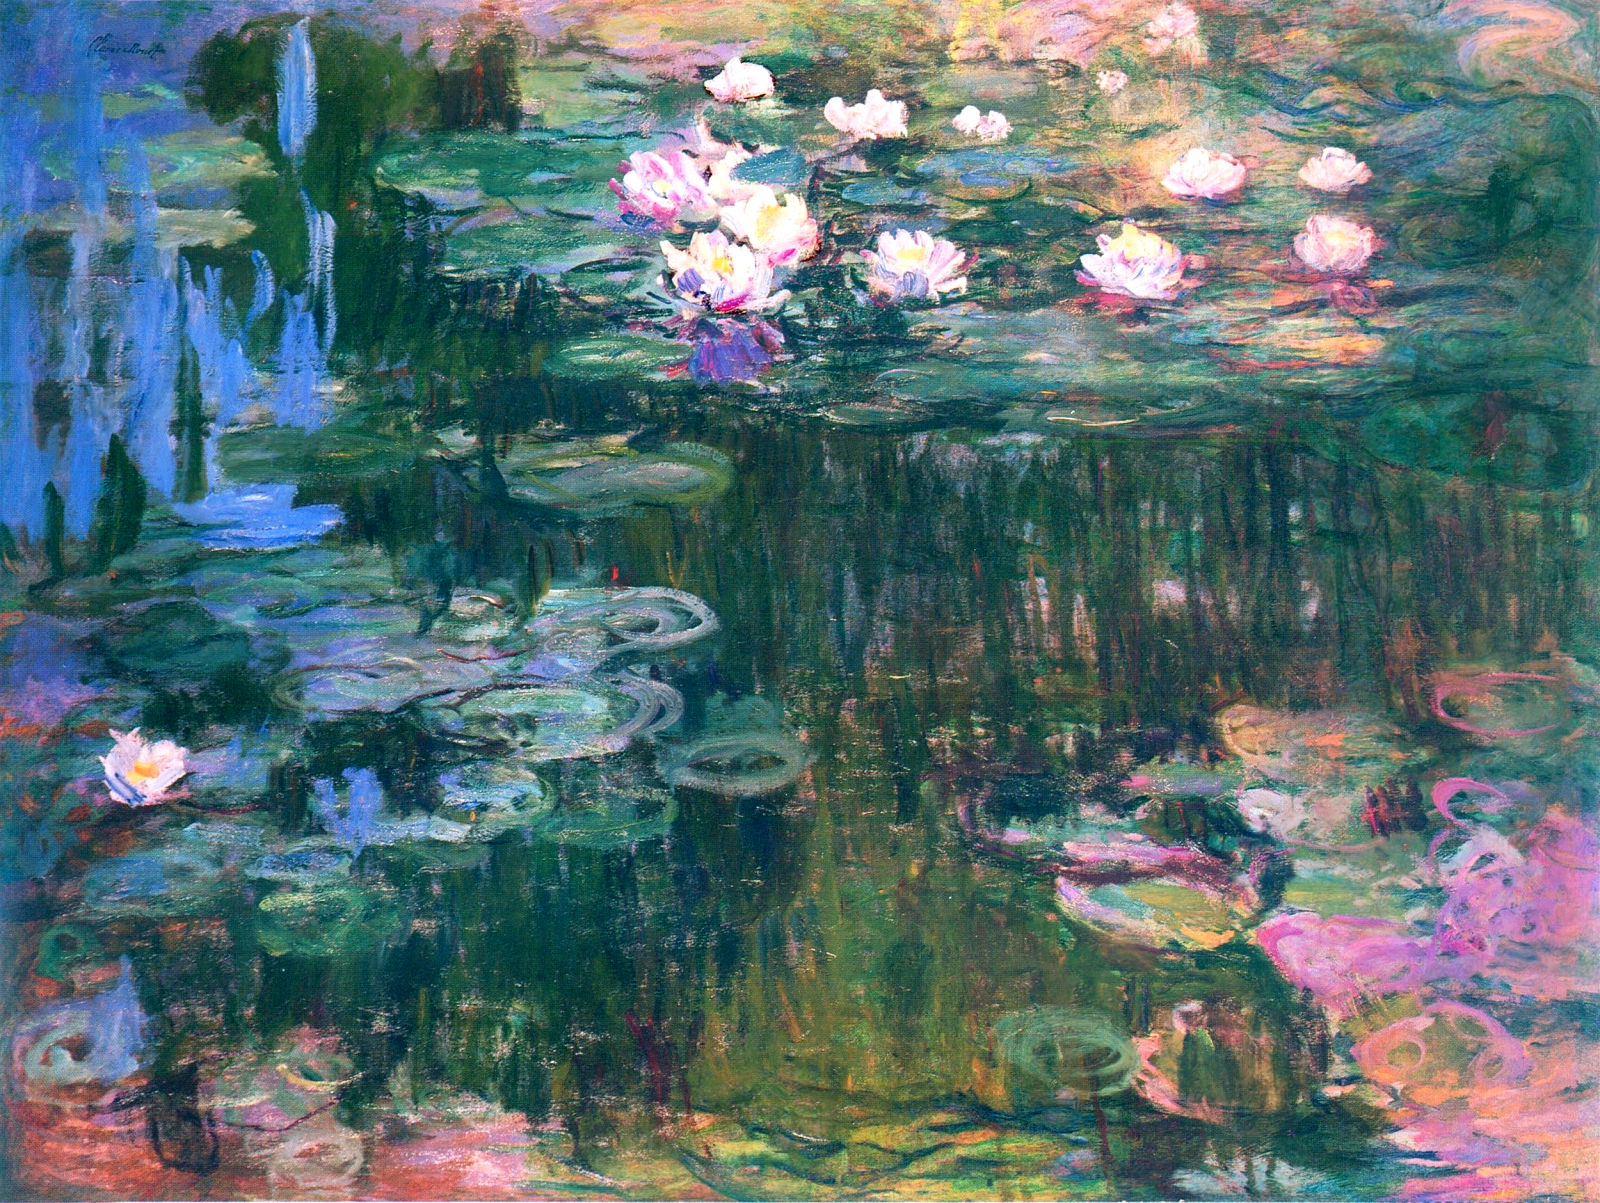 Claude+Monet-1840-1926 (1030).jpg